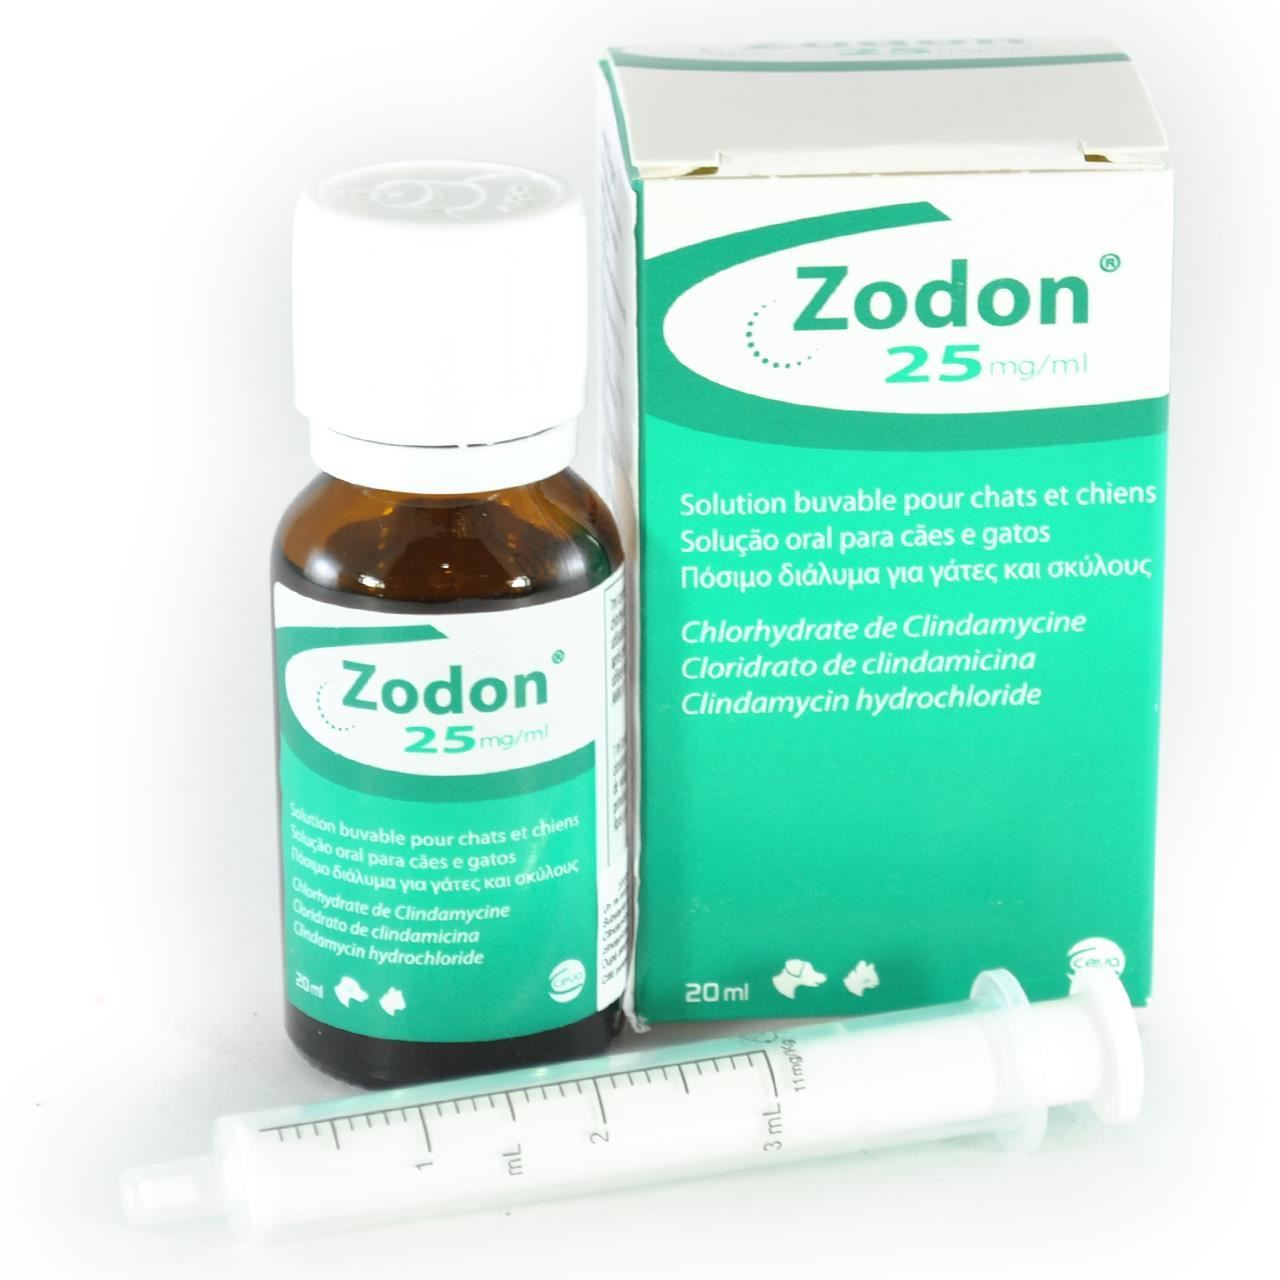 Zodon 25mg/ml, 20ml - ALTVET - Farmacie veterinara - Pet Shop - Cosmetica